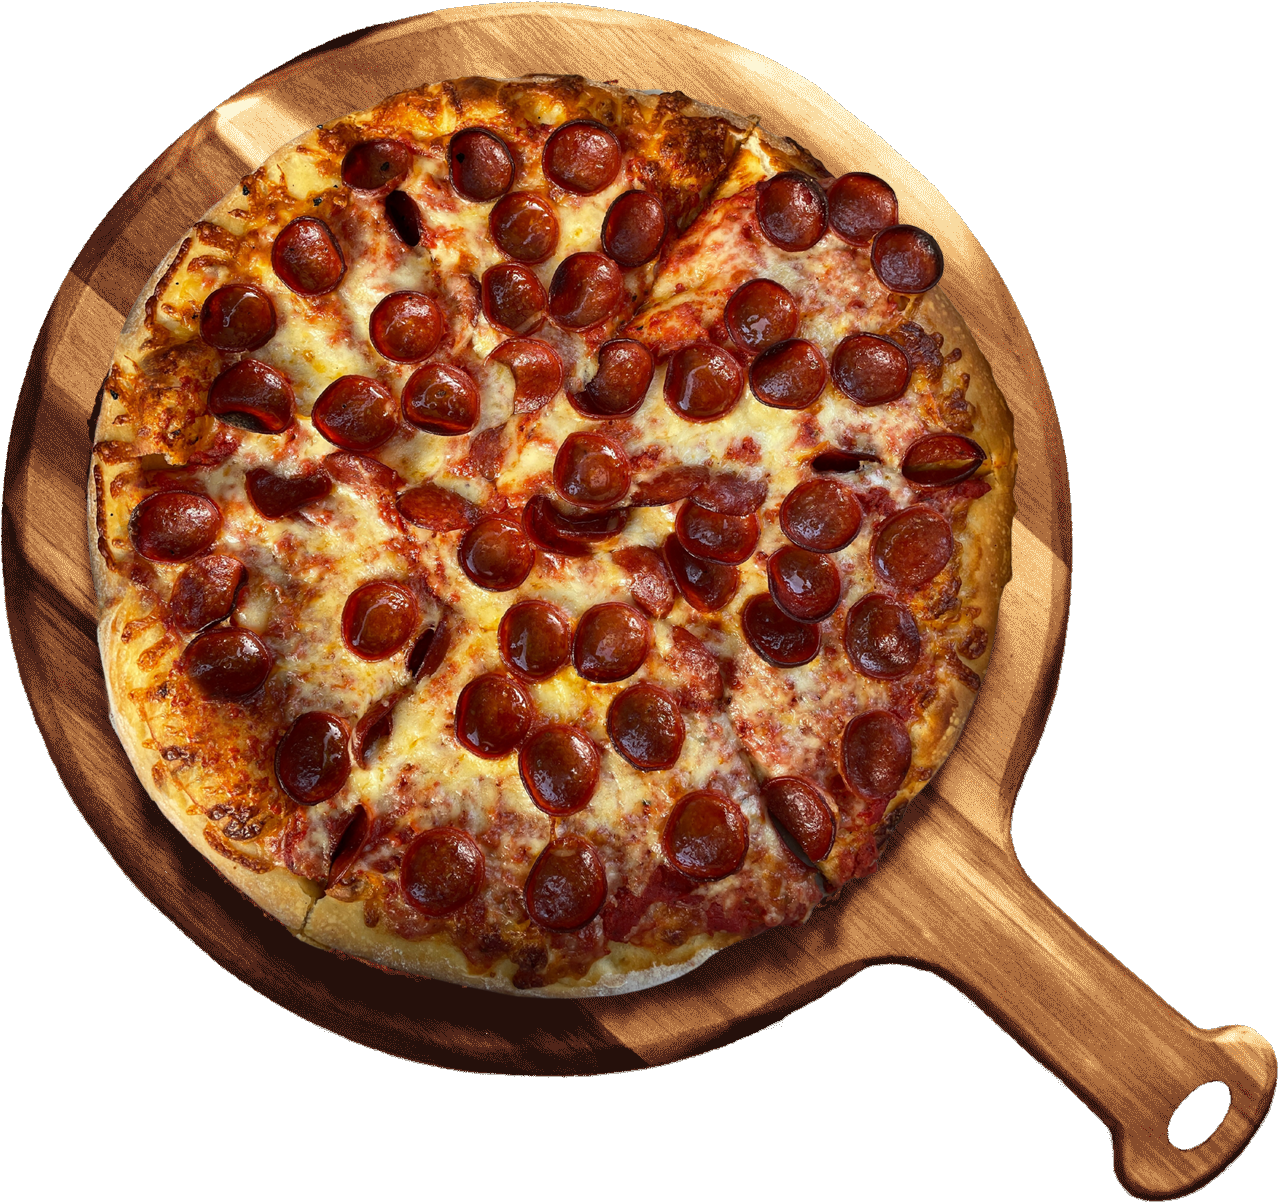 Bob & John's Pepperoni Pizza on a wooden paddle